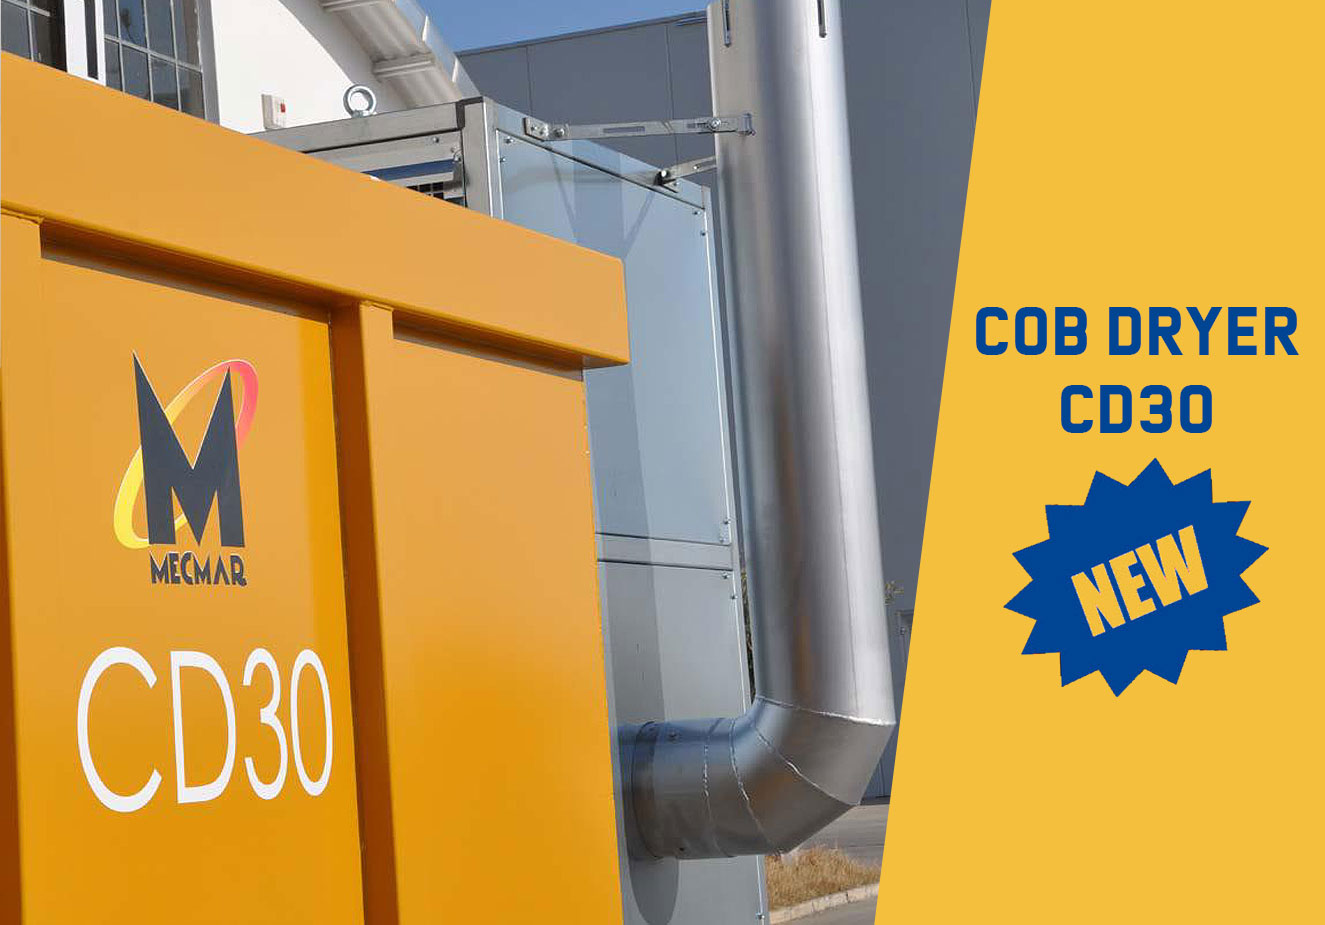 New Cob Dryer CD30